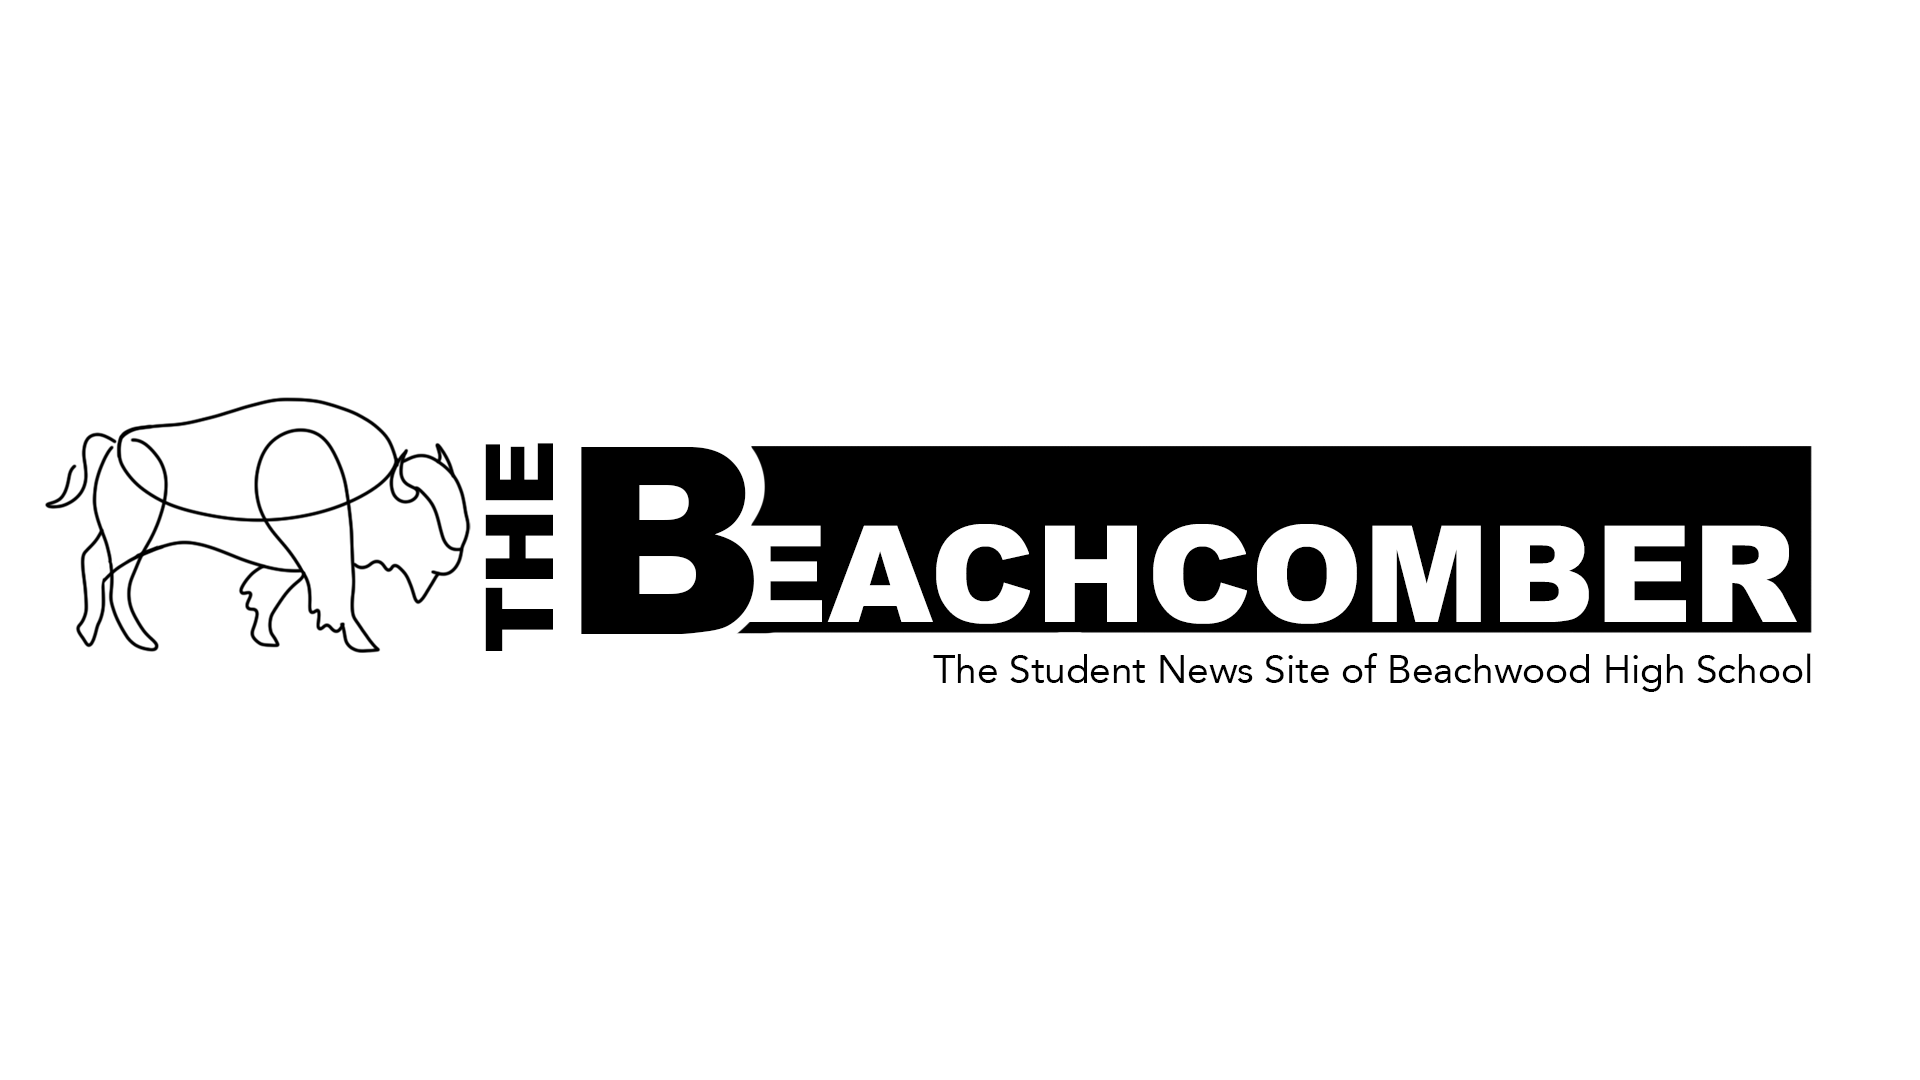 The student news site of Beachwood High School.